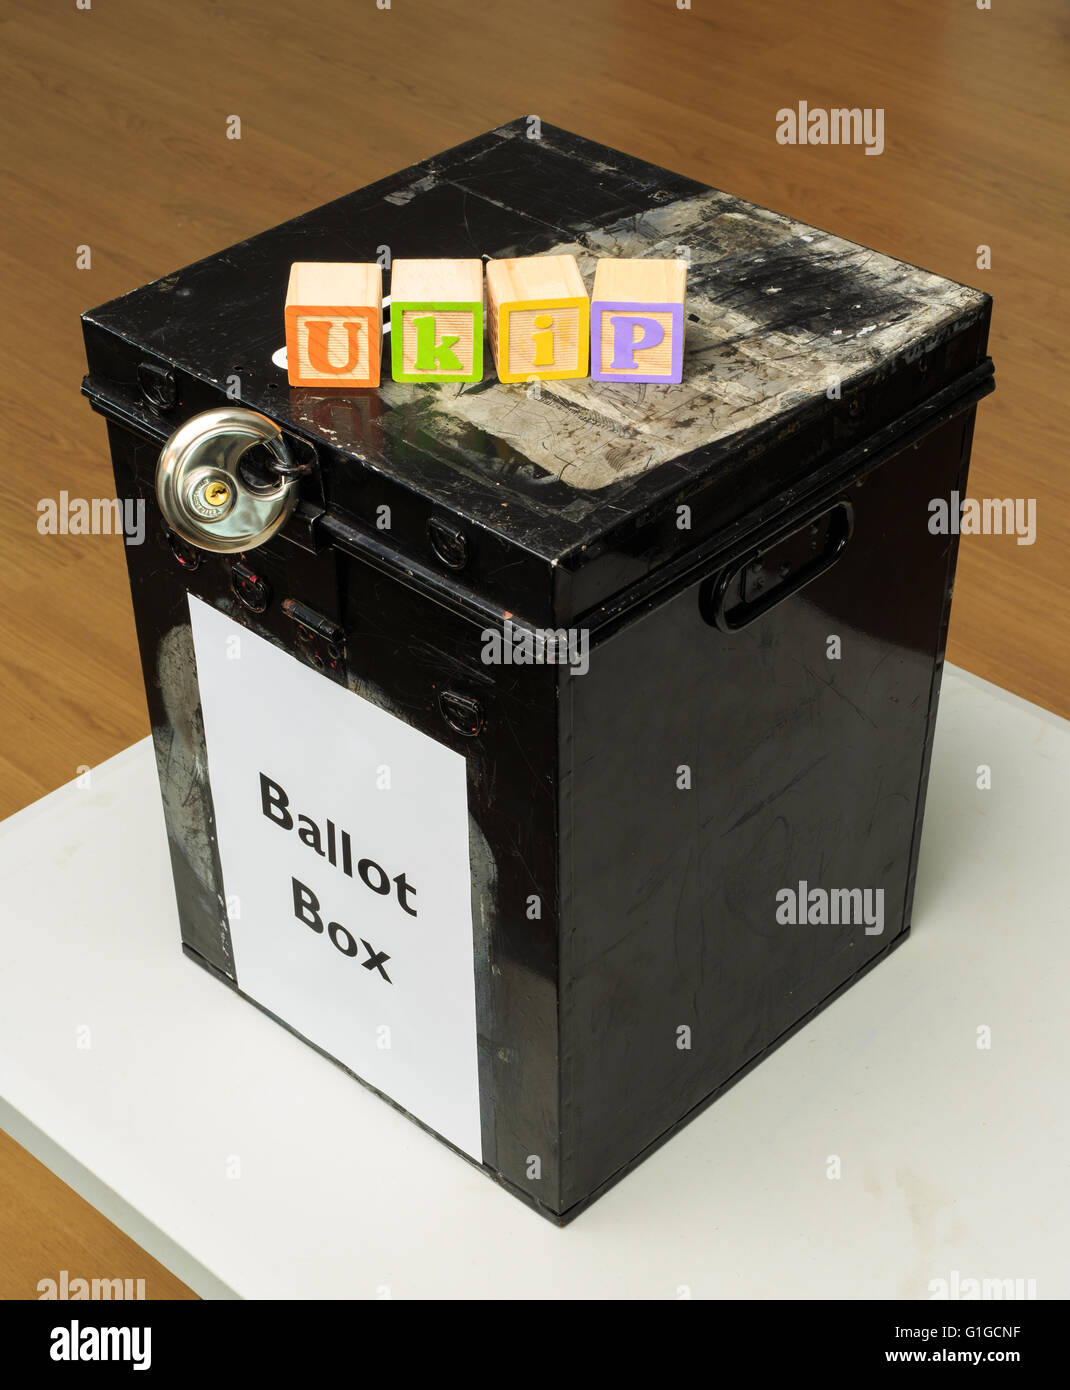 UK ballot box and childs' ABC blocks stating 'Ukip' in reference to British politics. Stock Photo